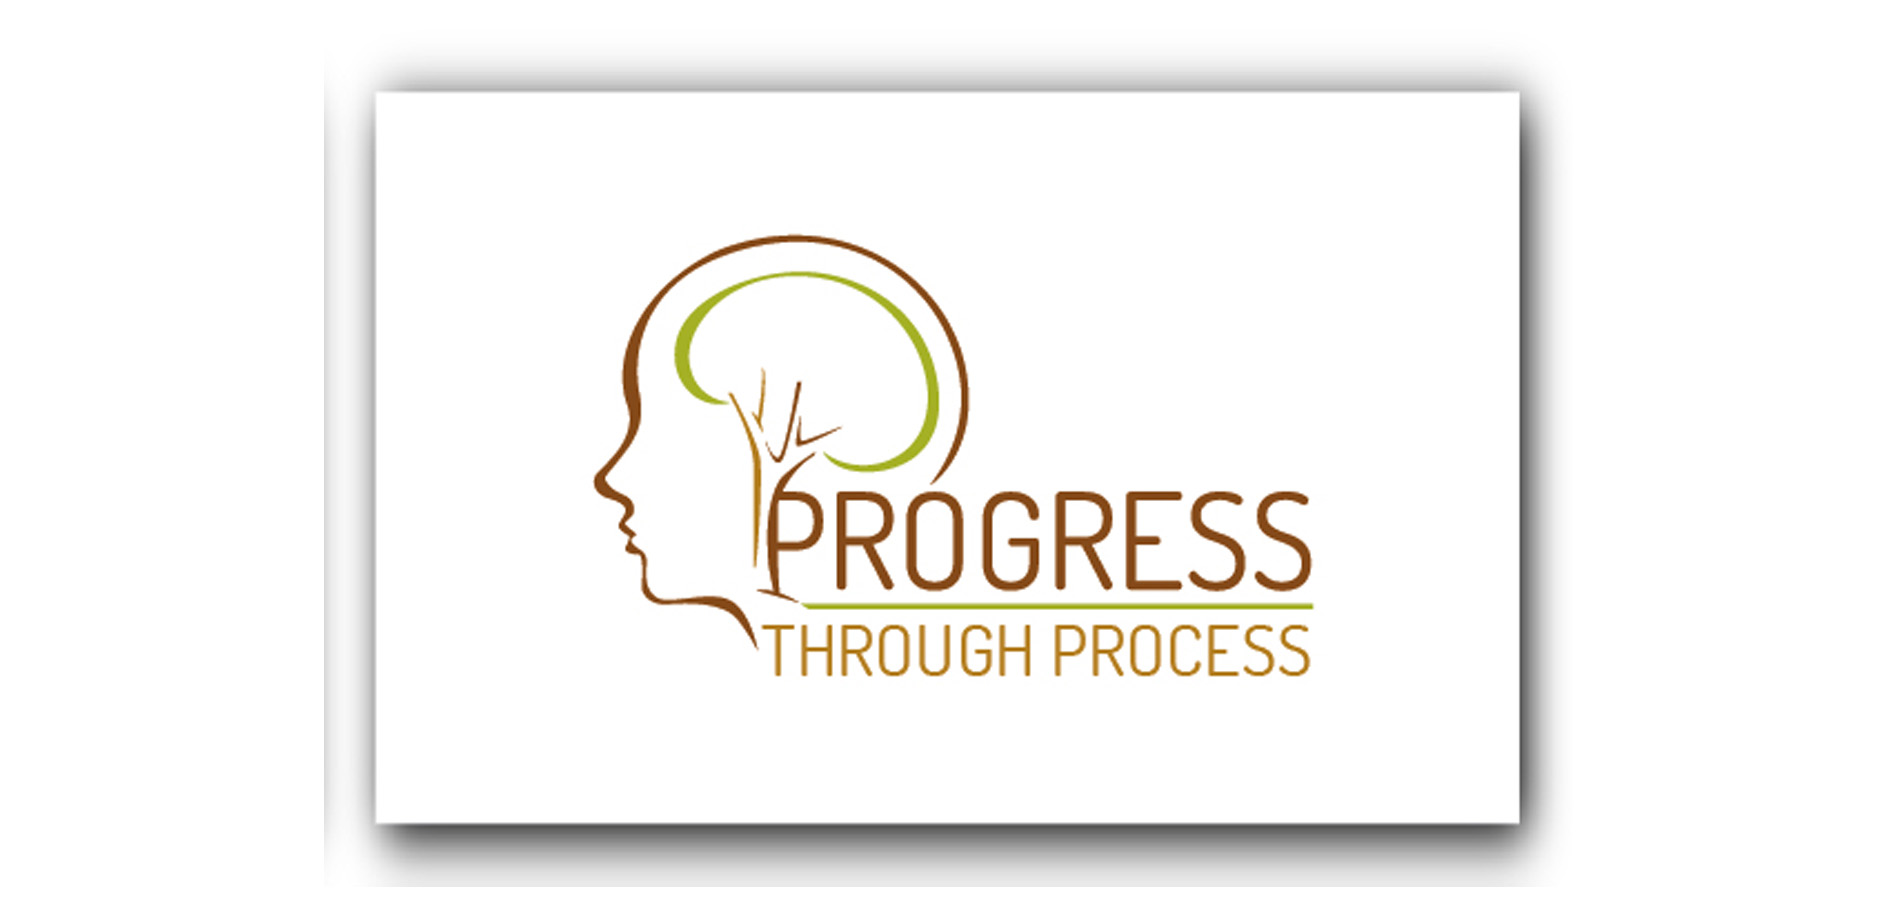 Progress Through Progress logo